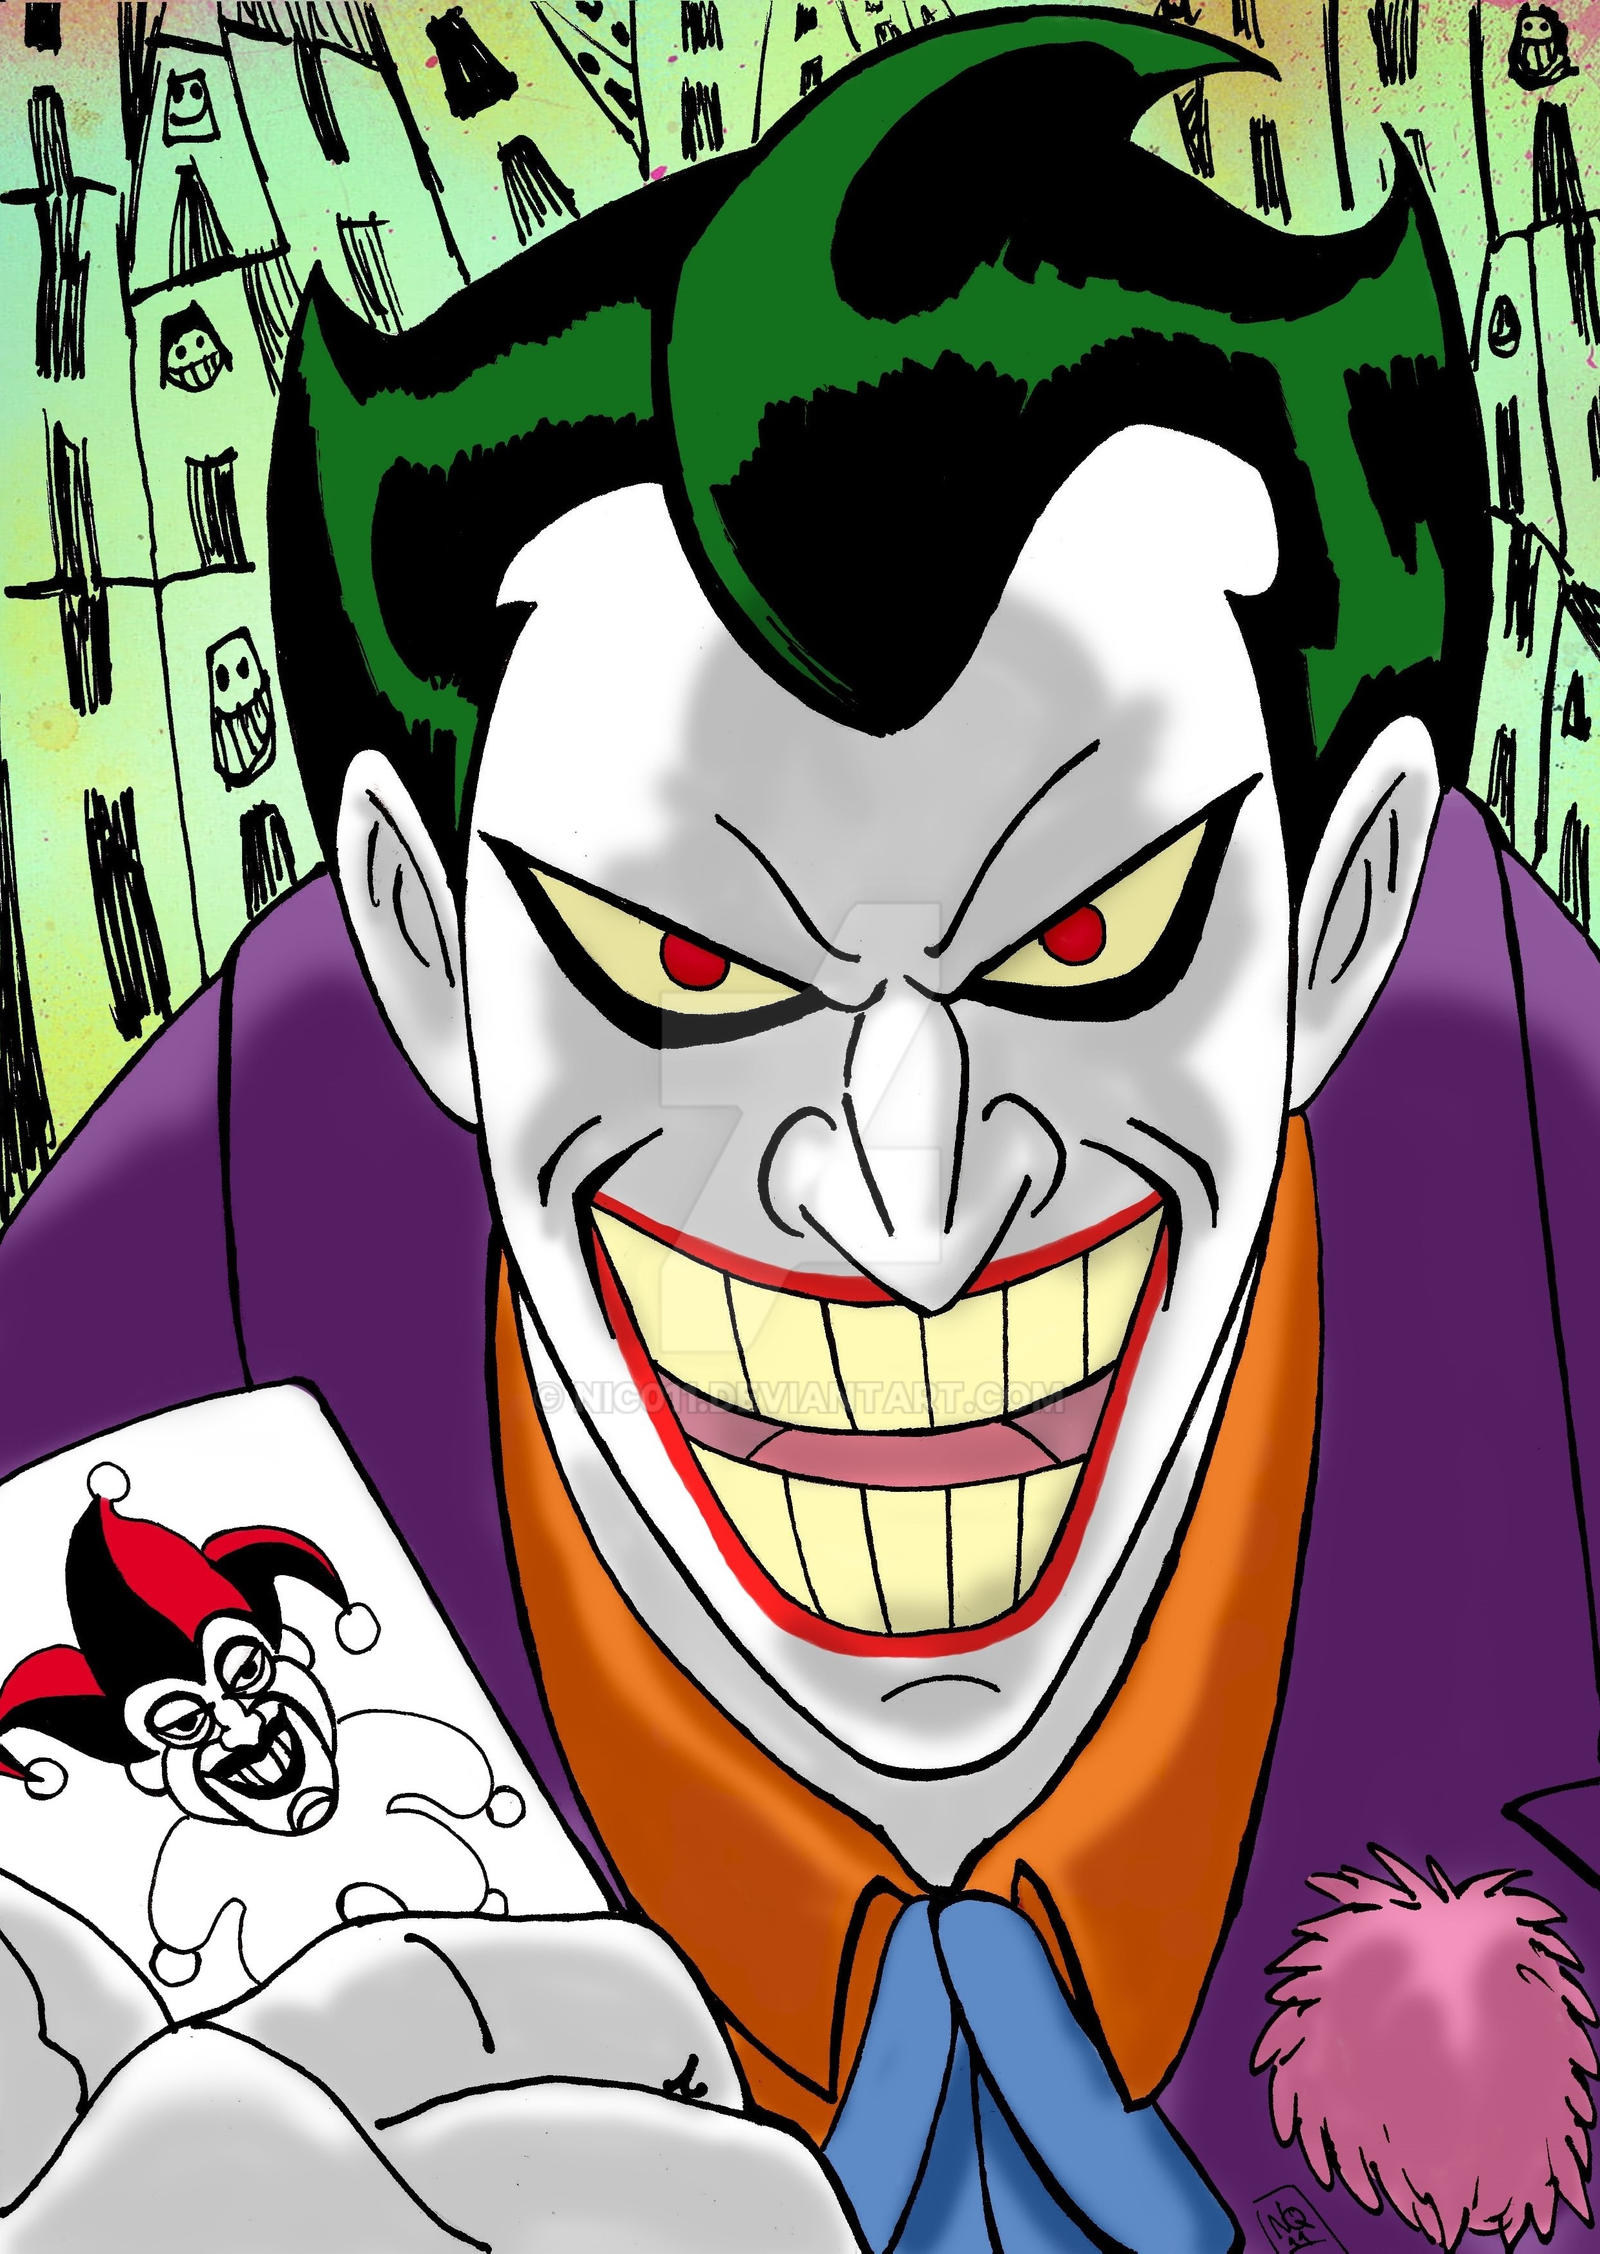 Joker quick sketch by nic011 on DeviantArt